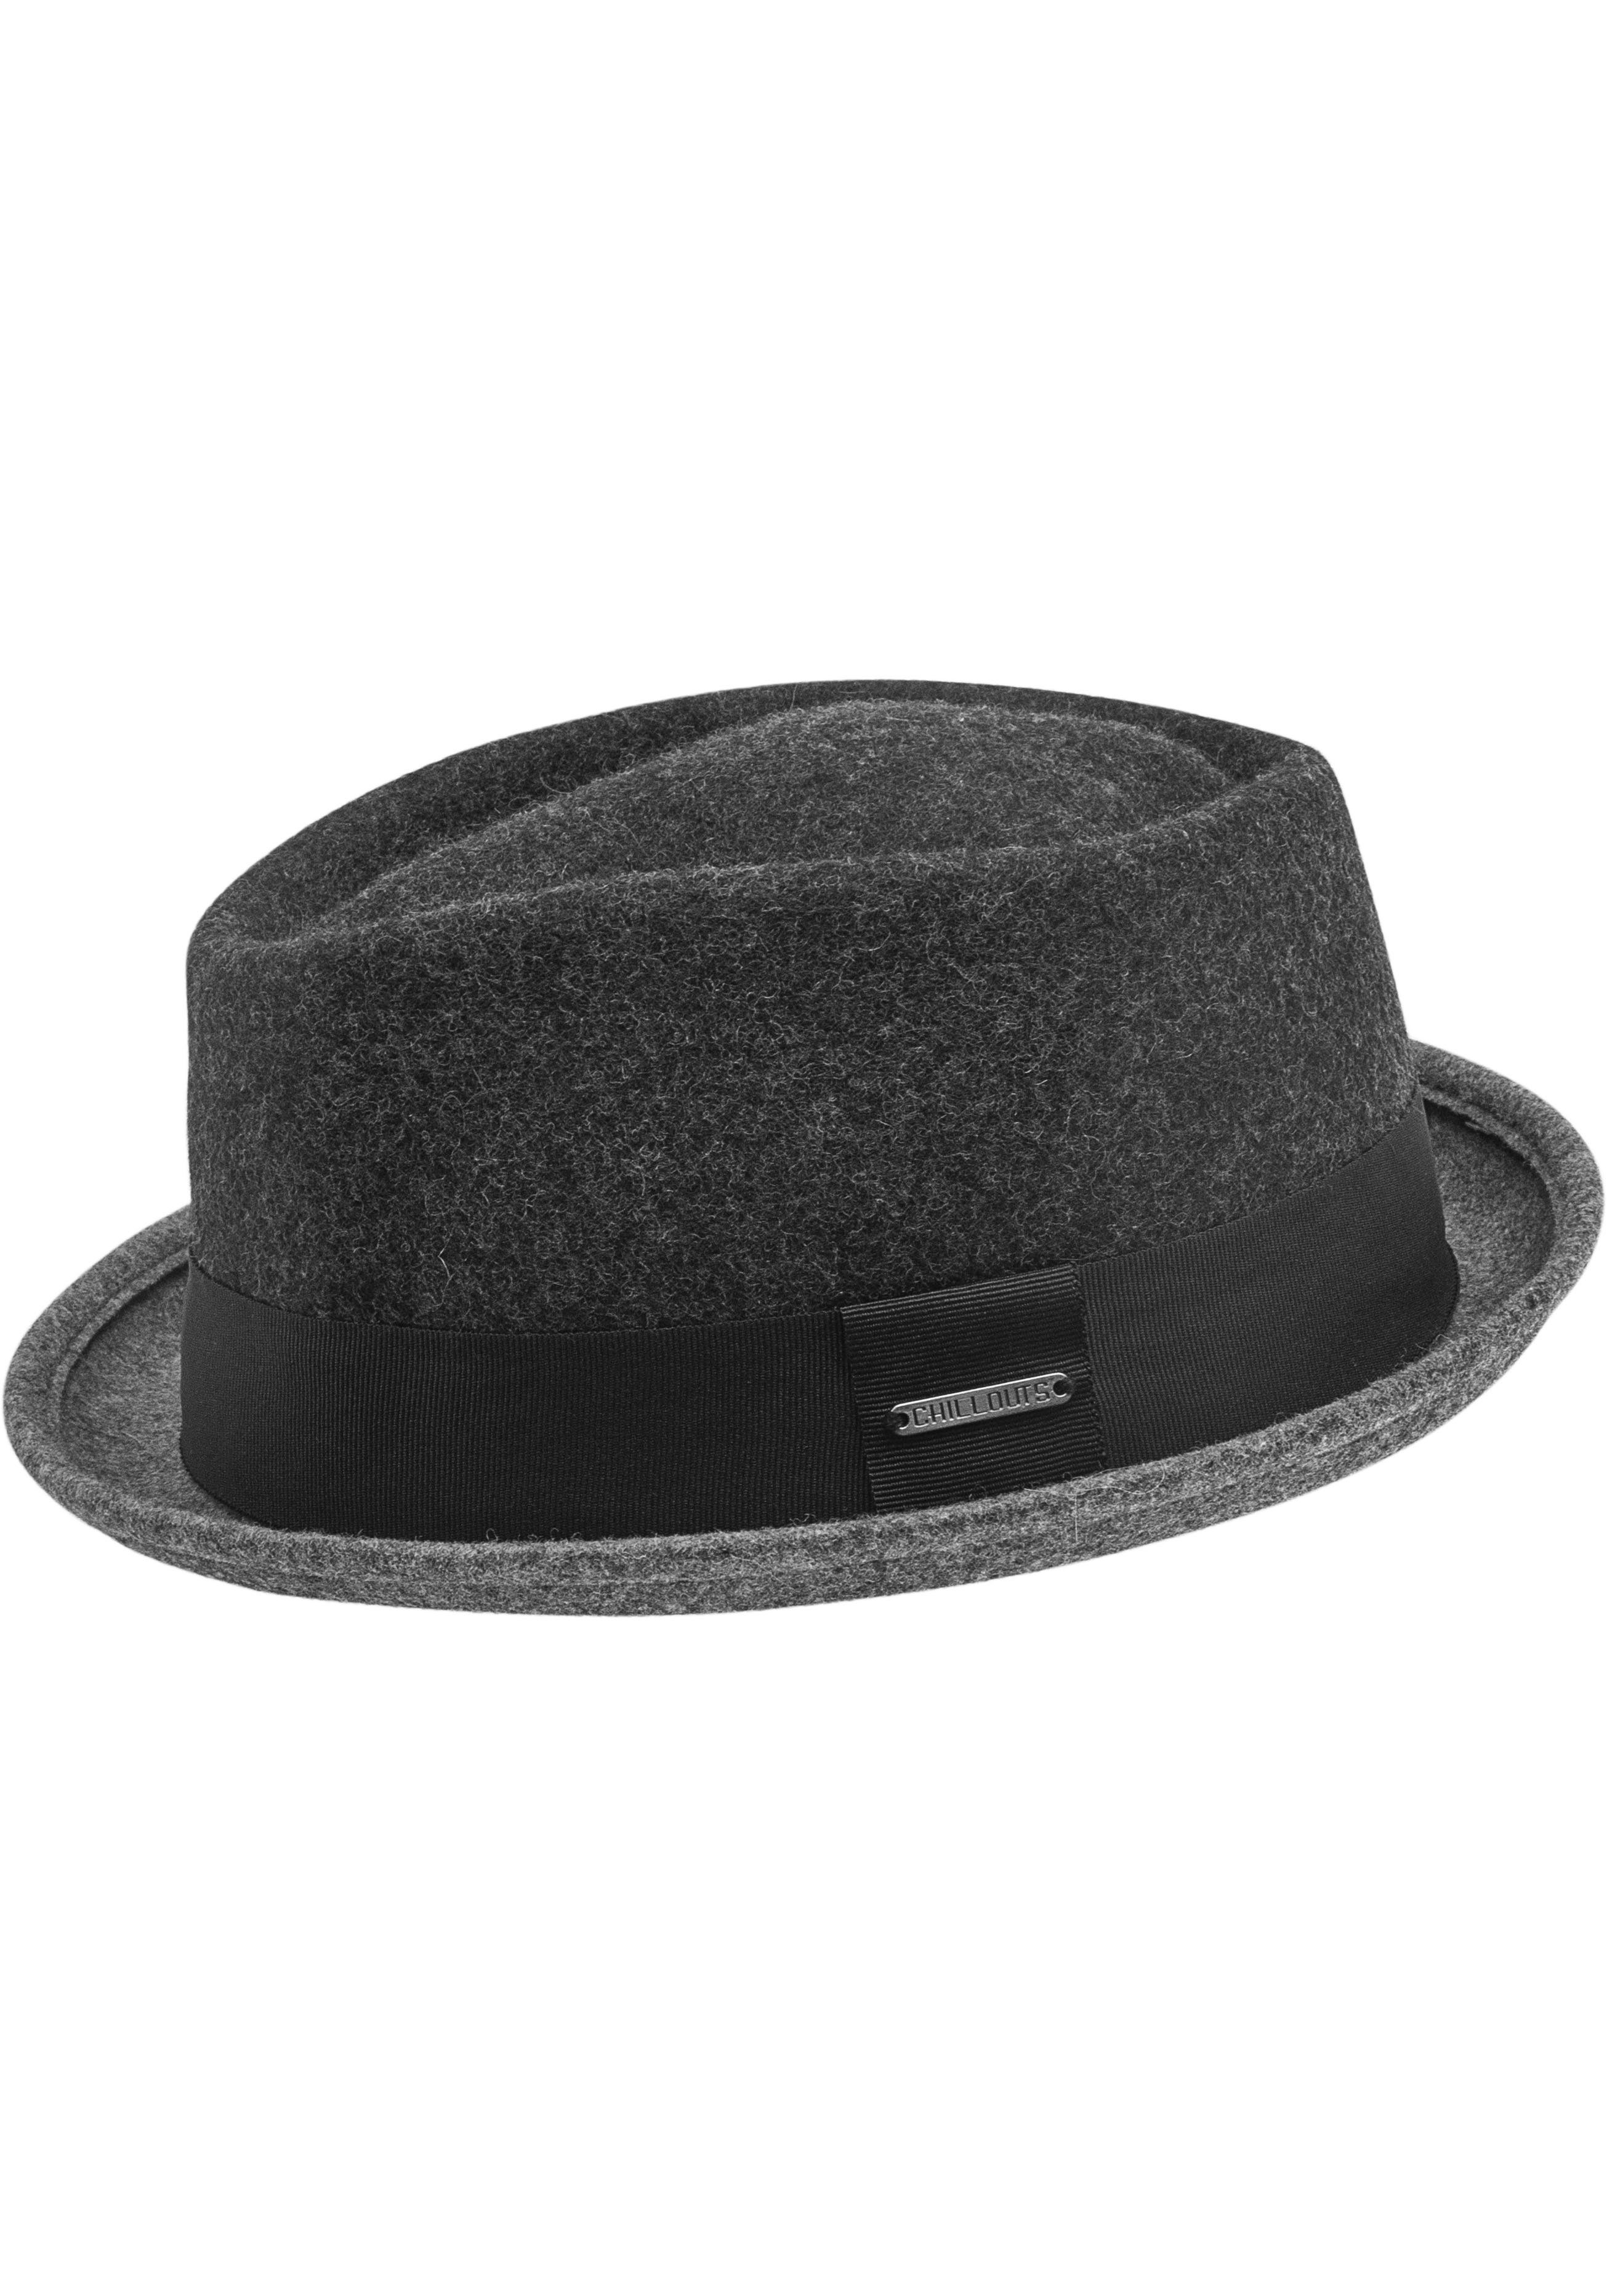 chillouts grey Hat dark Filzhut Neal